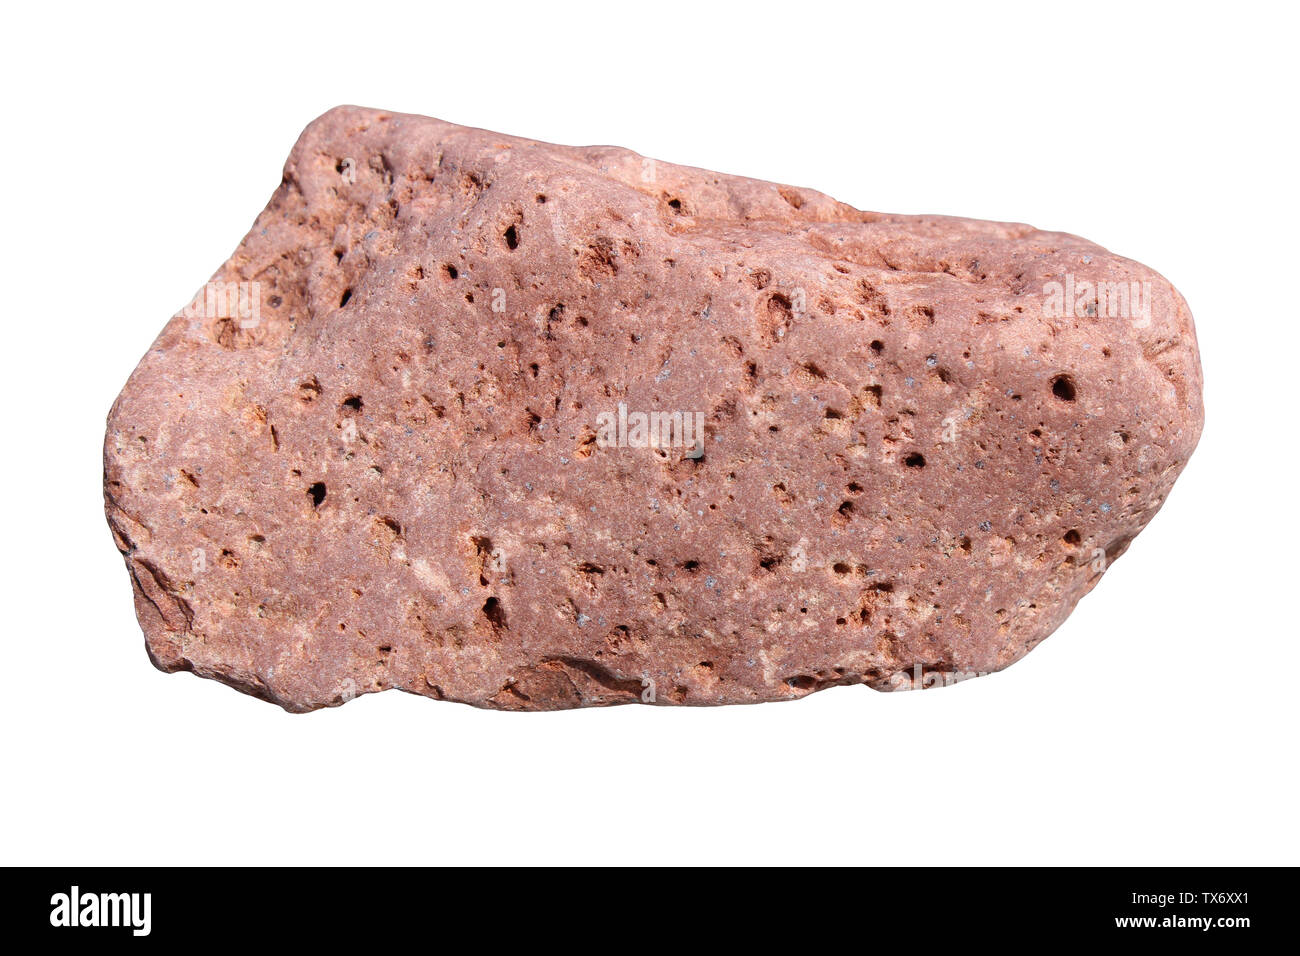 Weathered Rhyolite (Felsic - Silica rich) Stock Photo